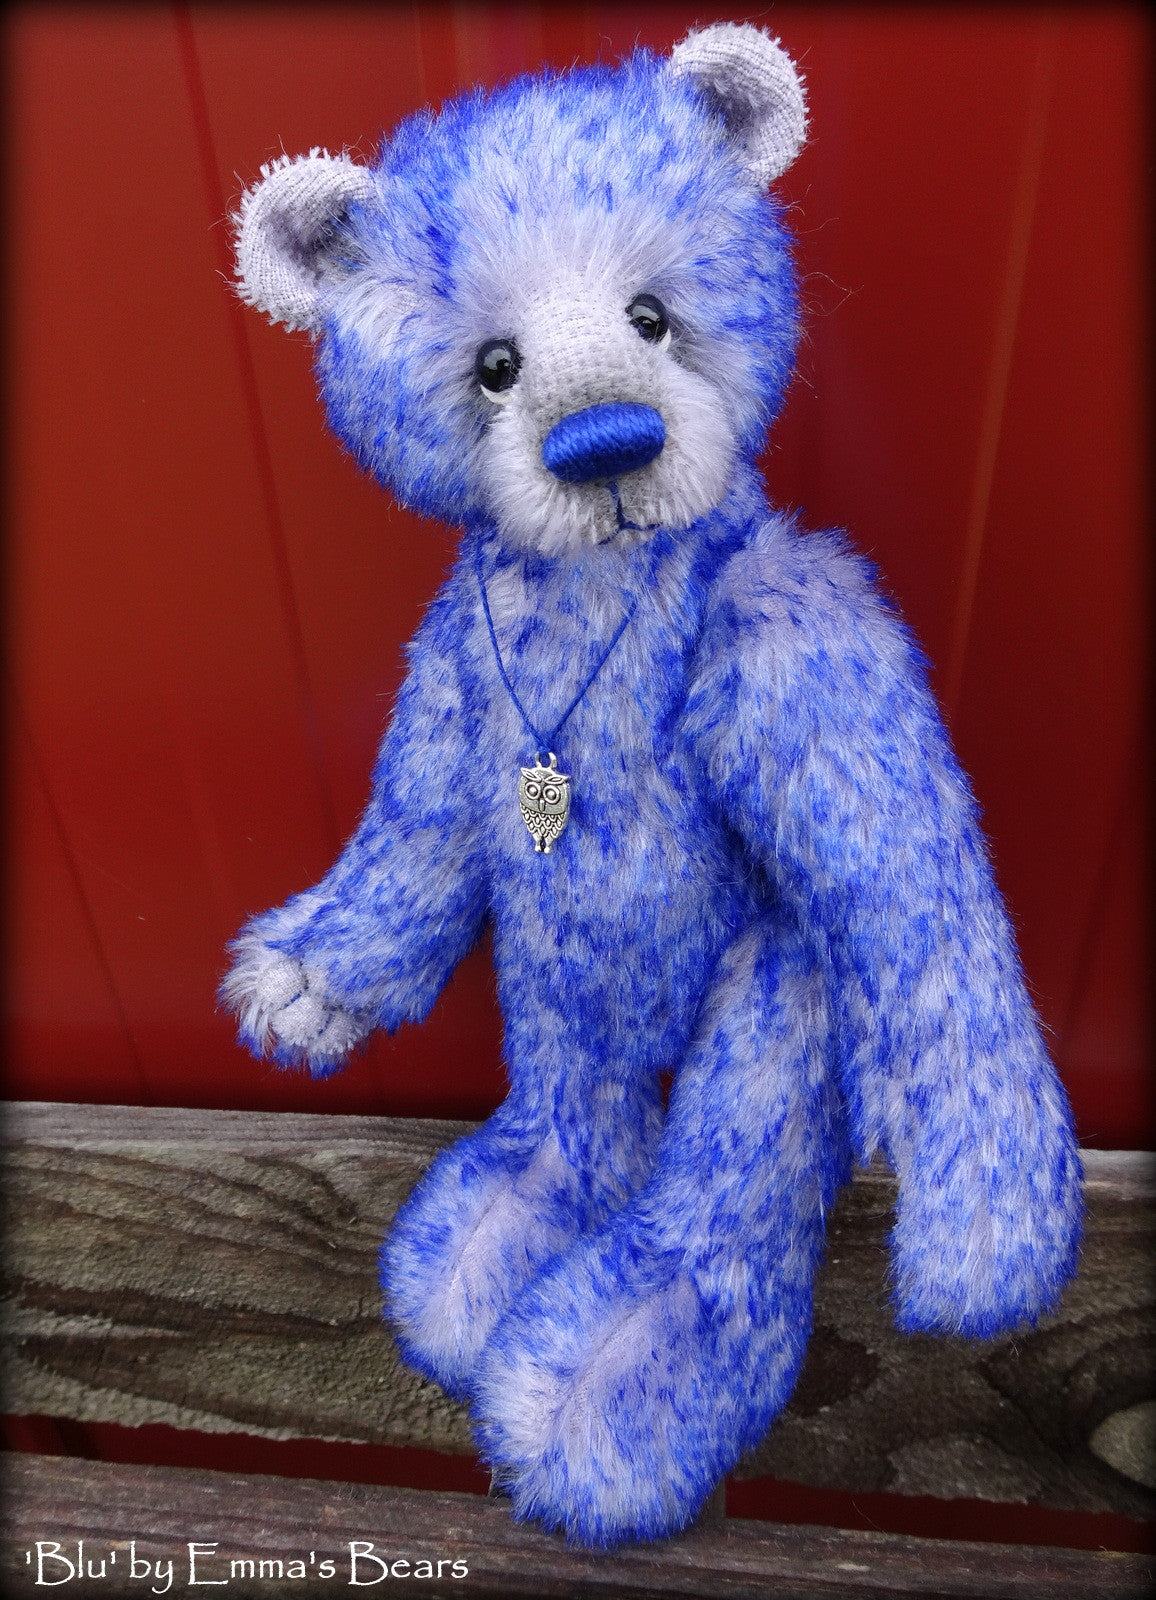 Blu - 9" mohair bear by Emmas Bears - OOAK